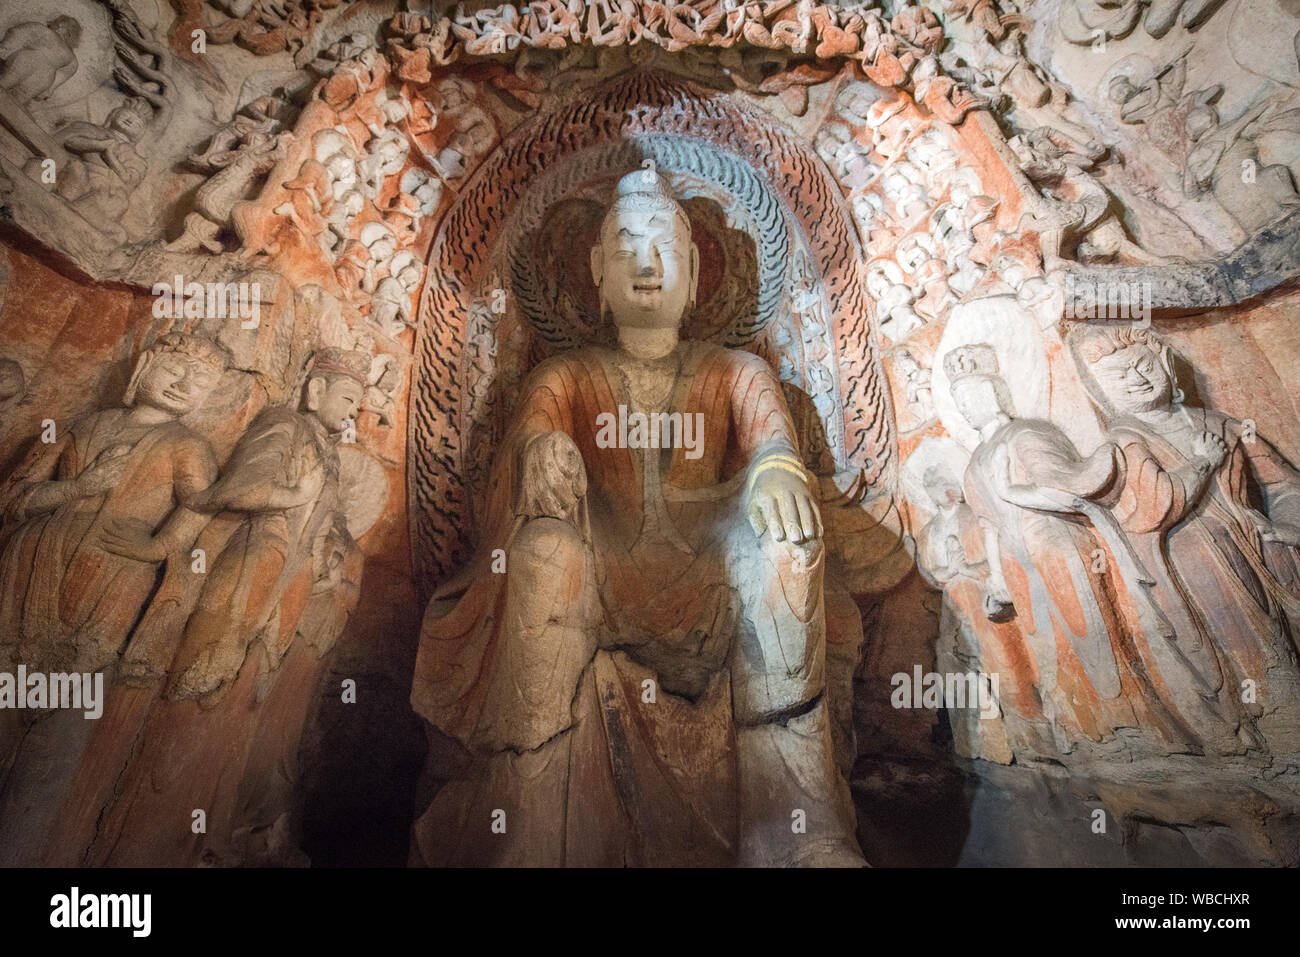 The Datong Great Buddhas in China Stock Photo